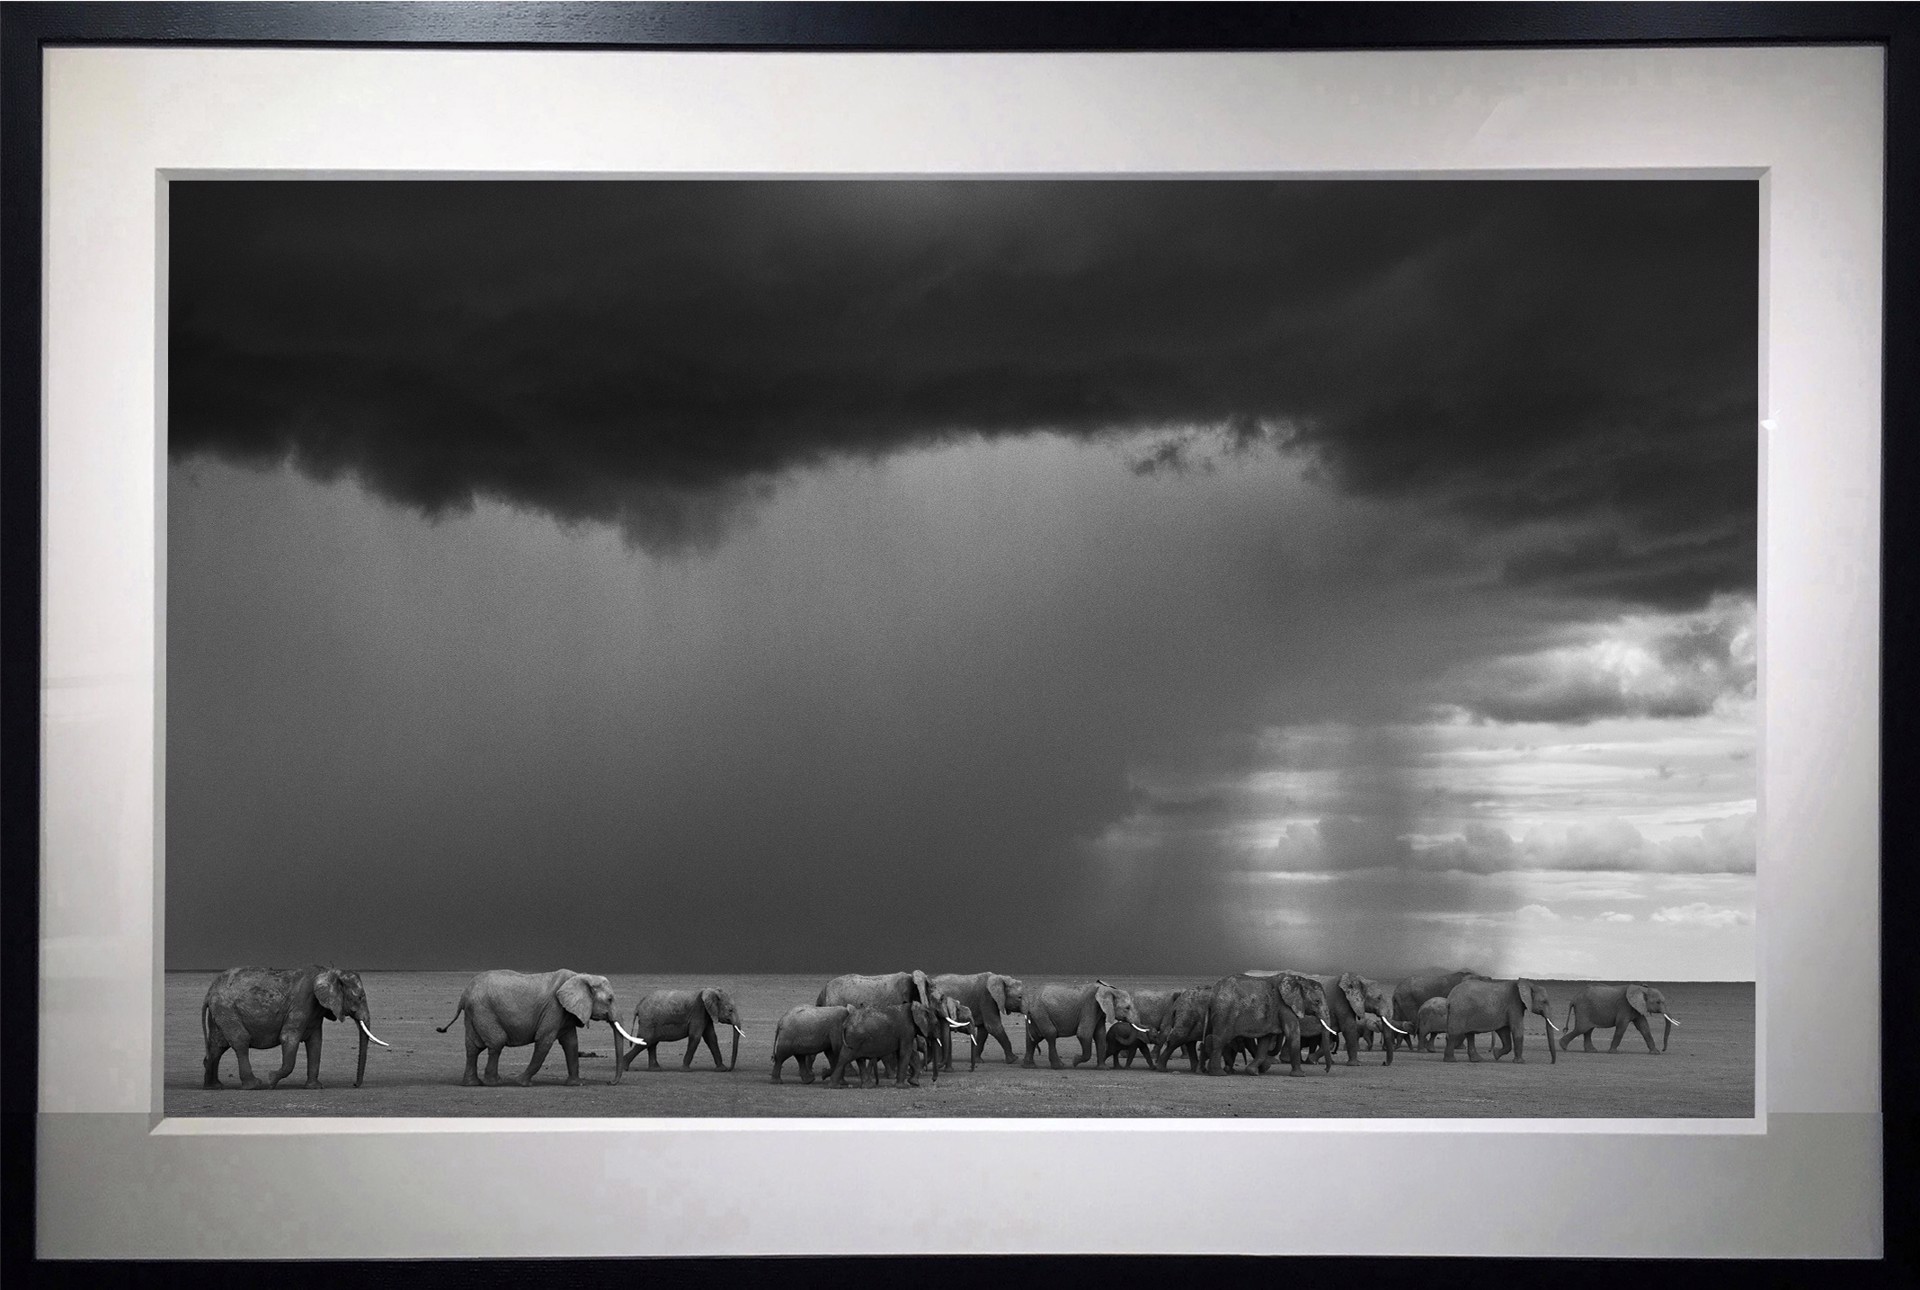 The Gathering Storm by David Yarrow